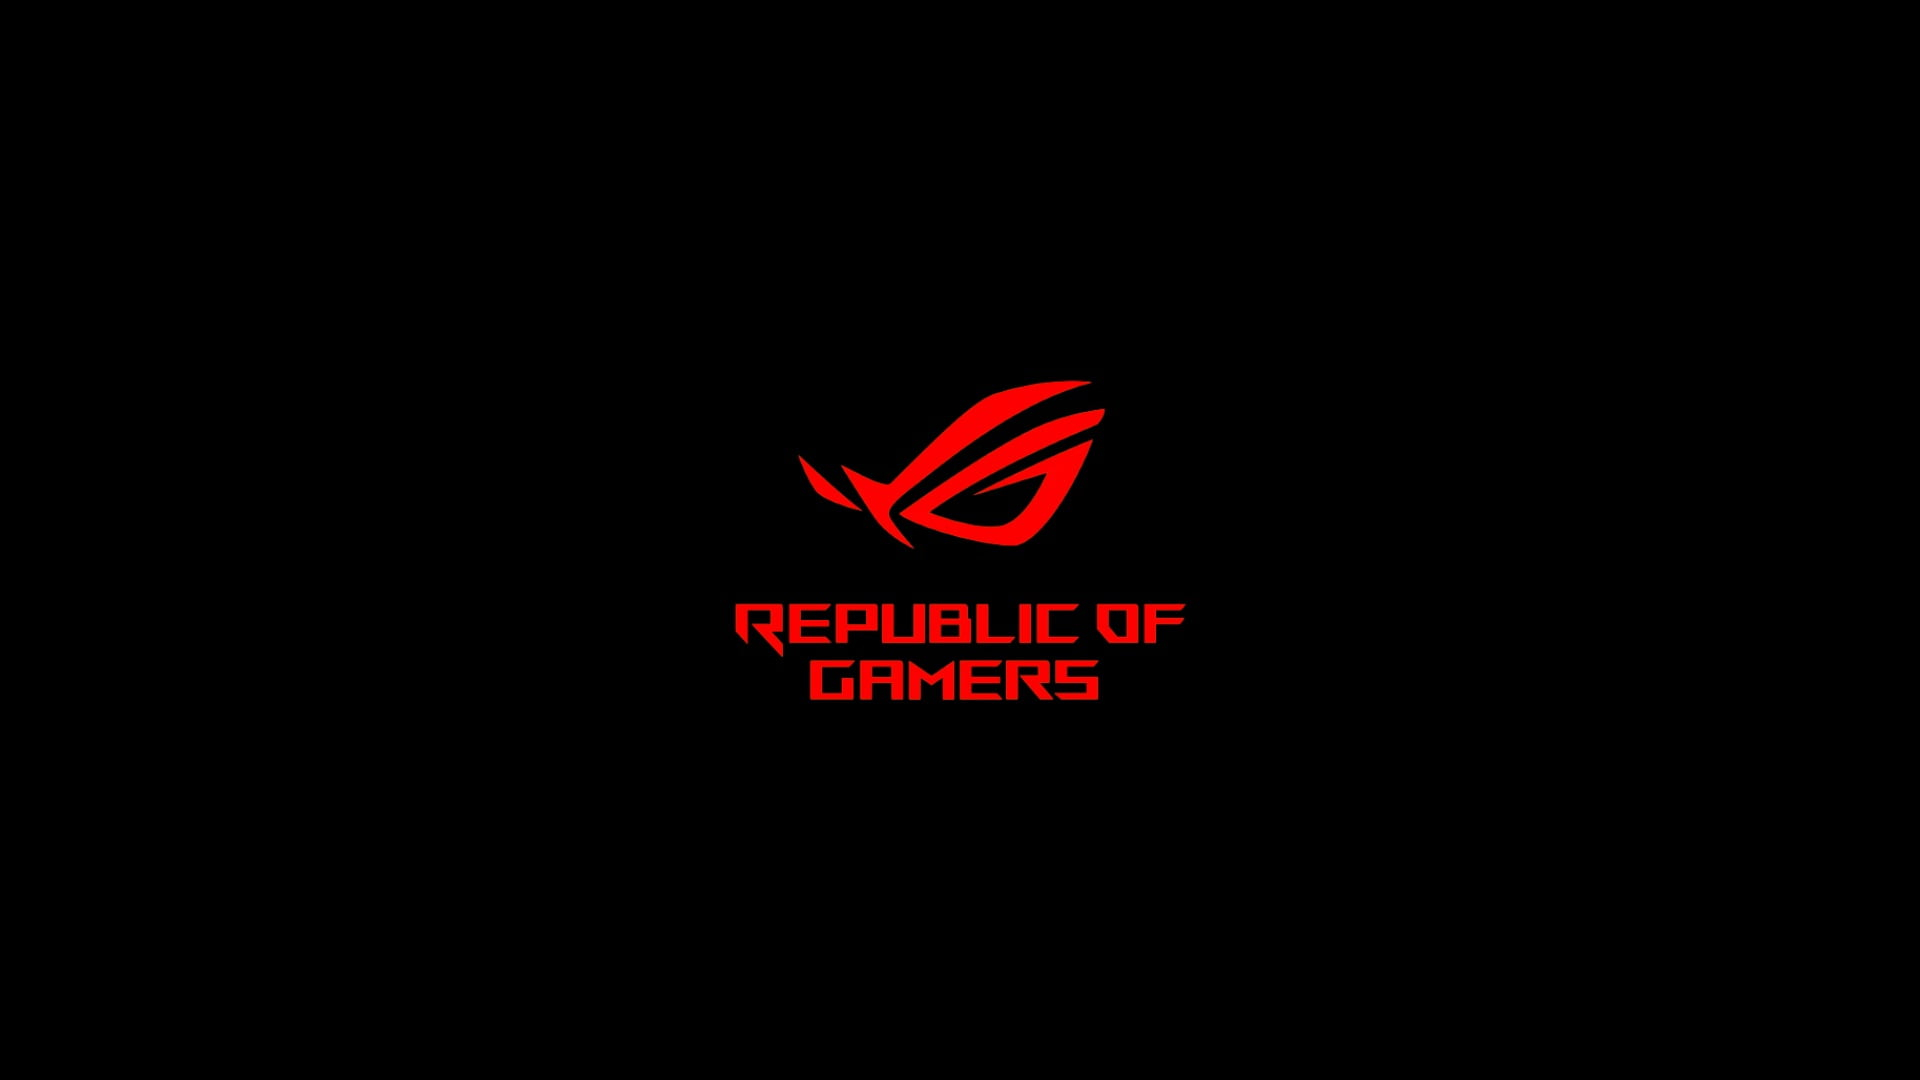 ASUS, Republic of Gamers, red, communication, illuminated, black background